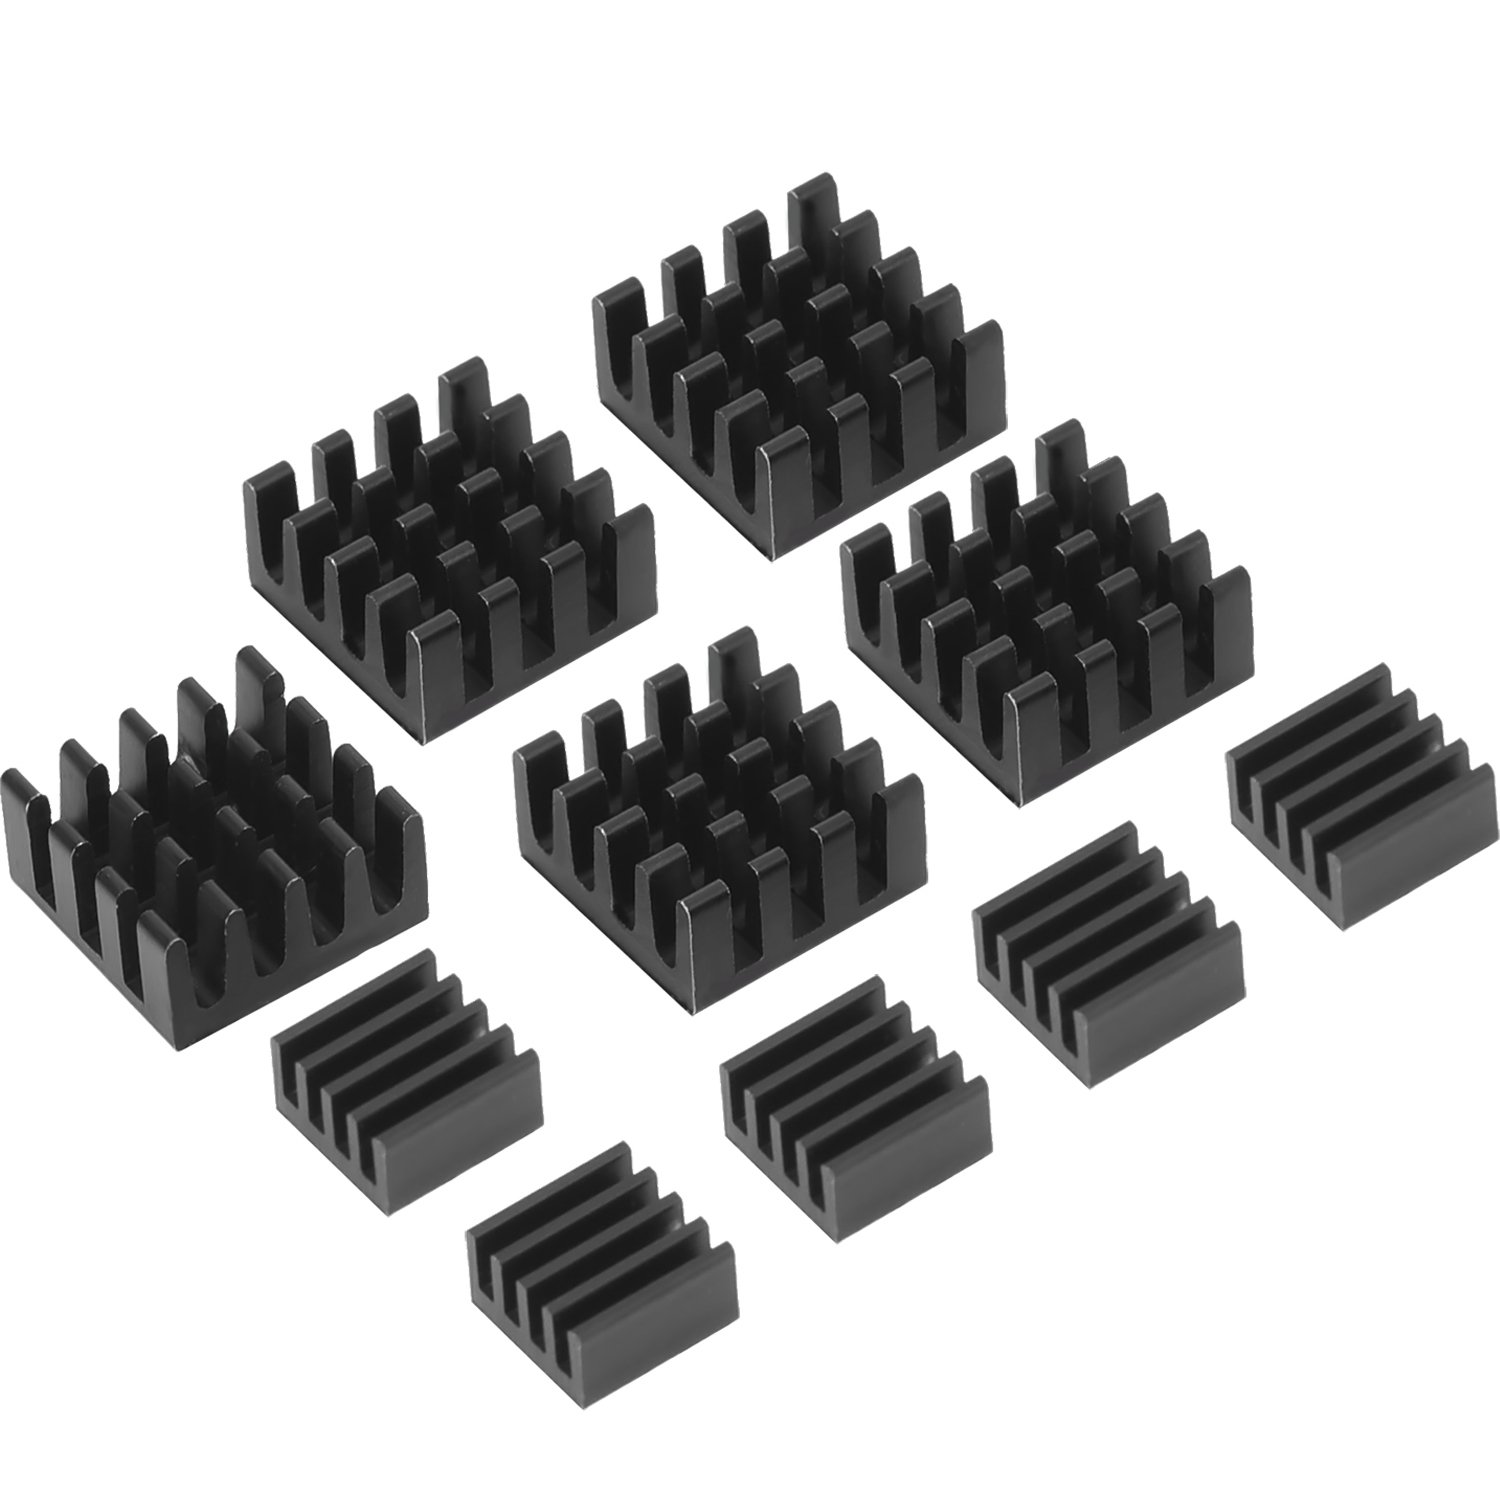 Buy Mudder Black Aluminum Heatsink Cooler Cooling Kit for Raspberry Pi 3, Pi 2, Pi Model B+, 10 Pieces